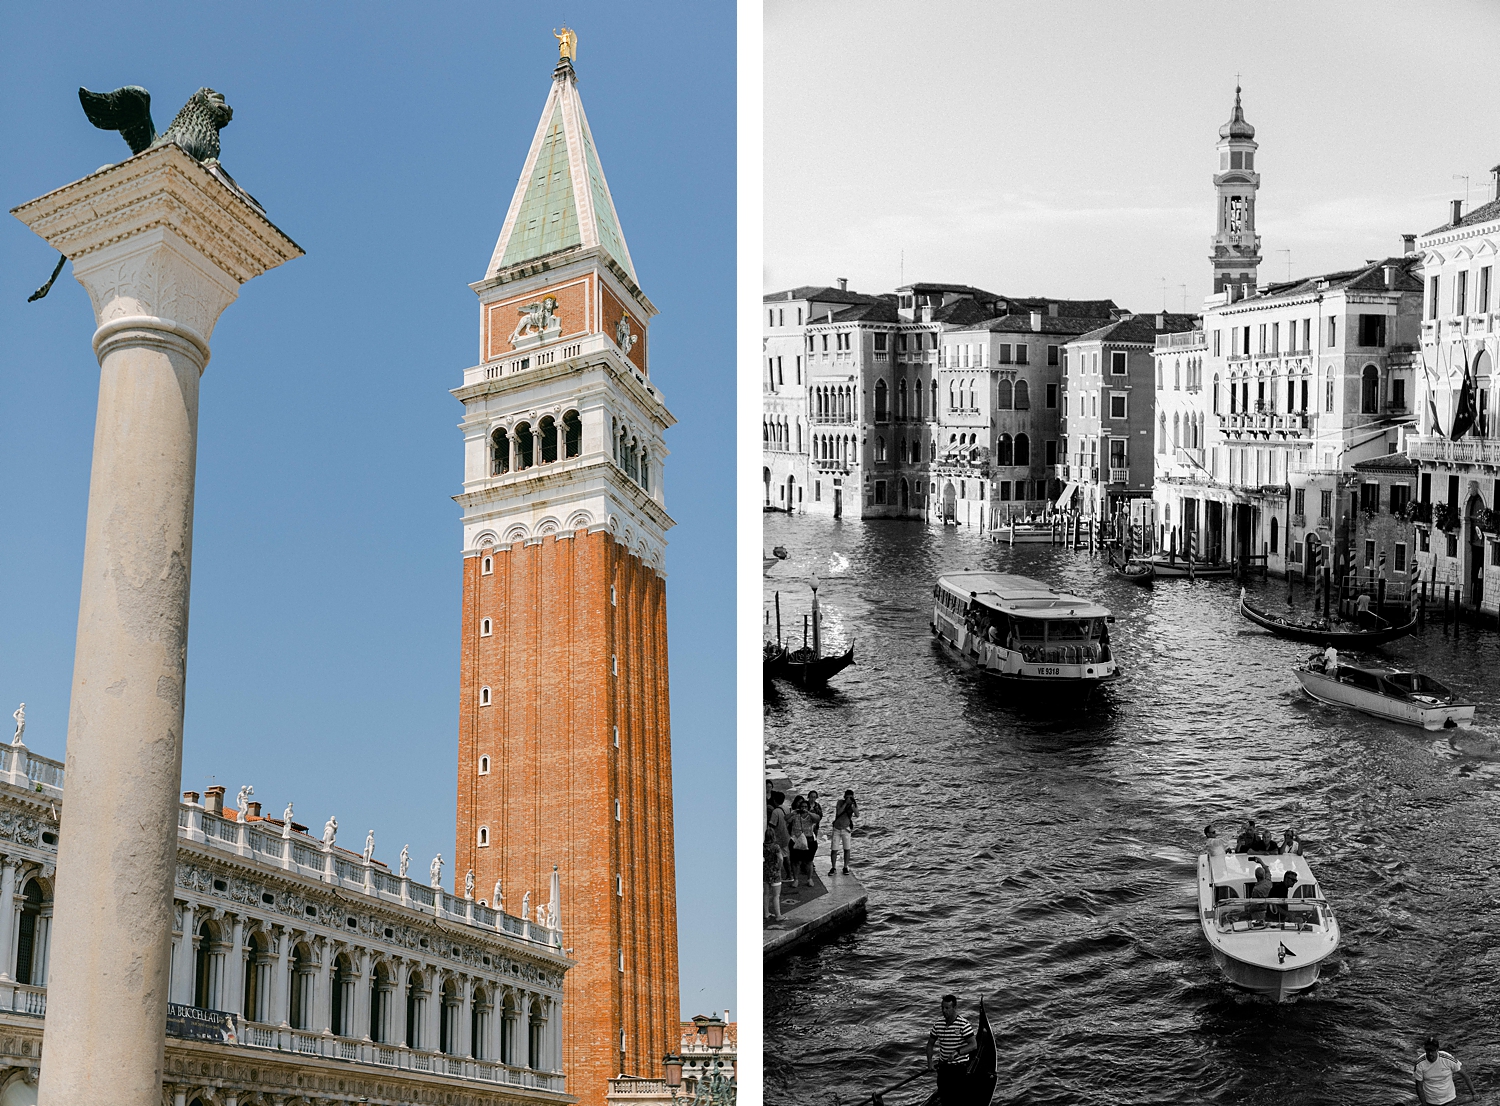 Orange St Mark's Campanile Bell Tower in Venice 